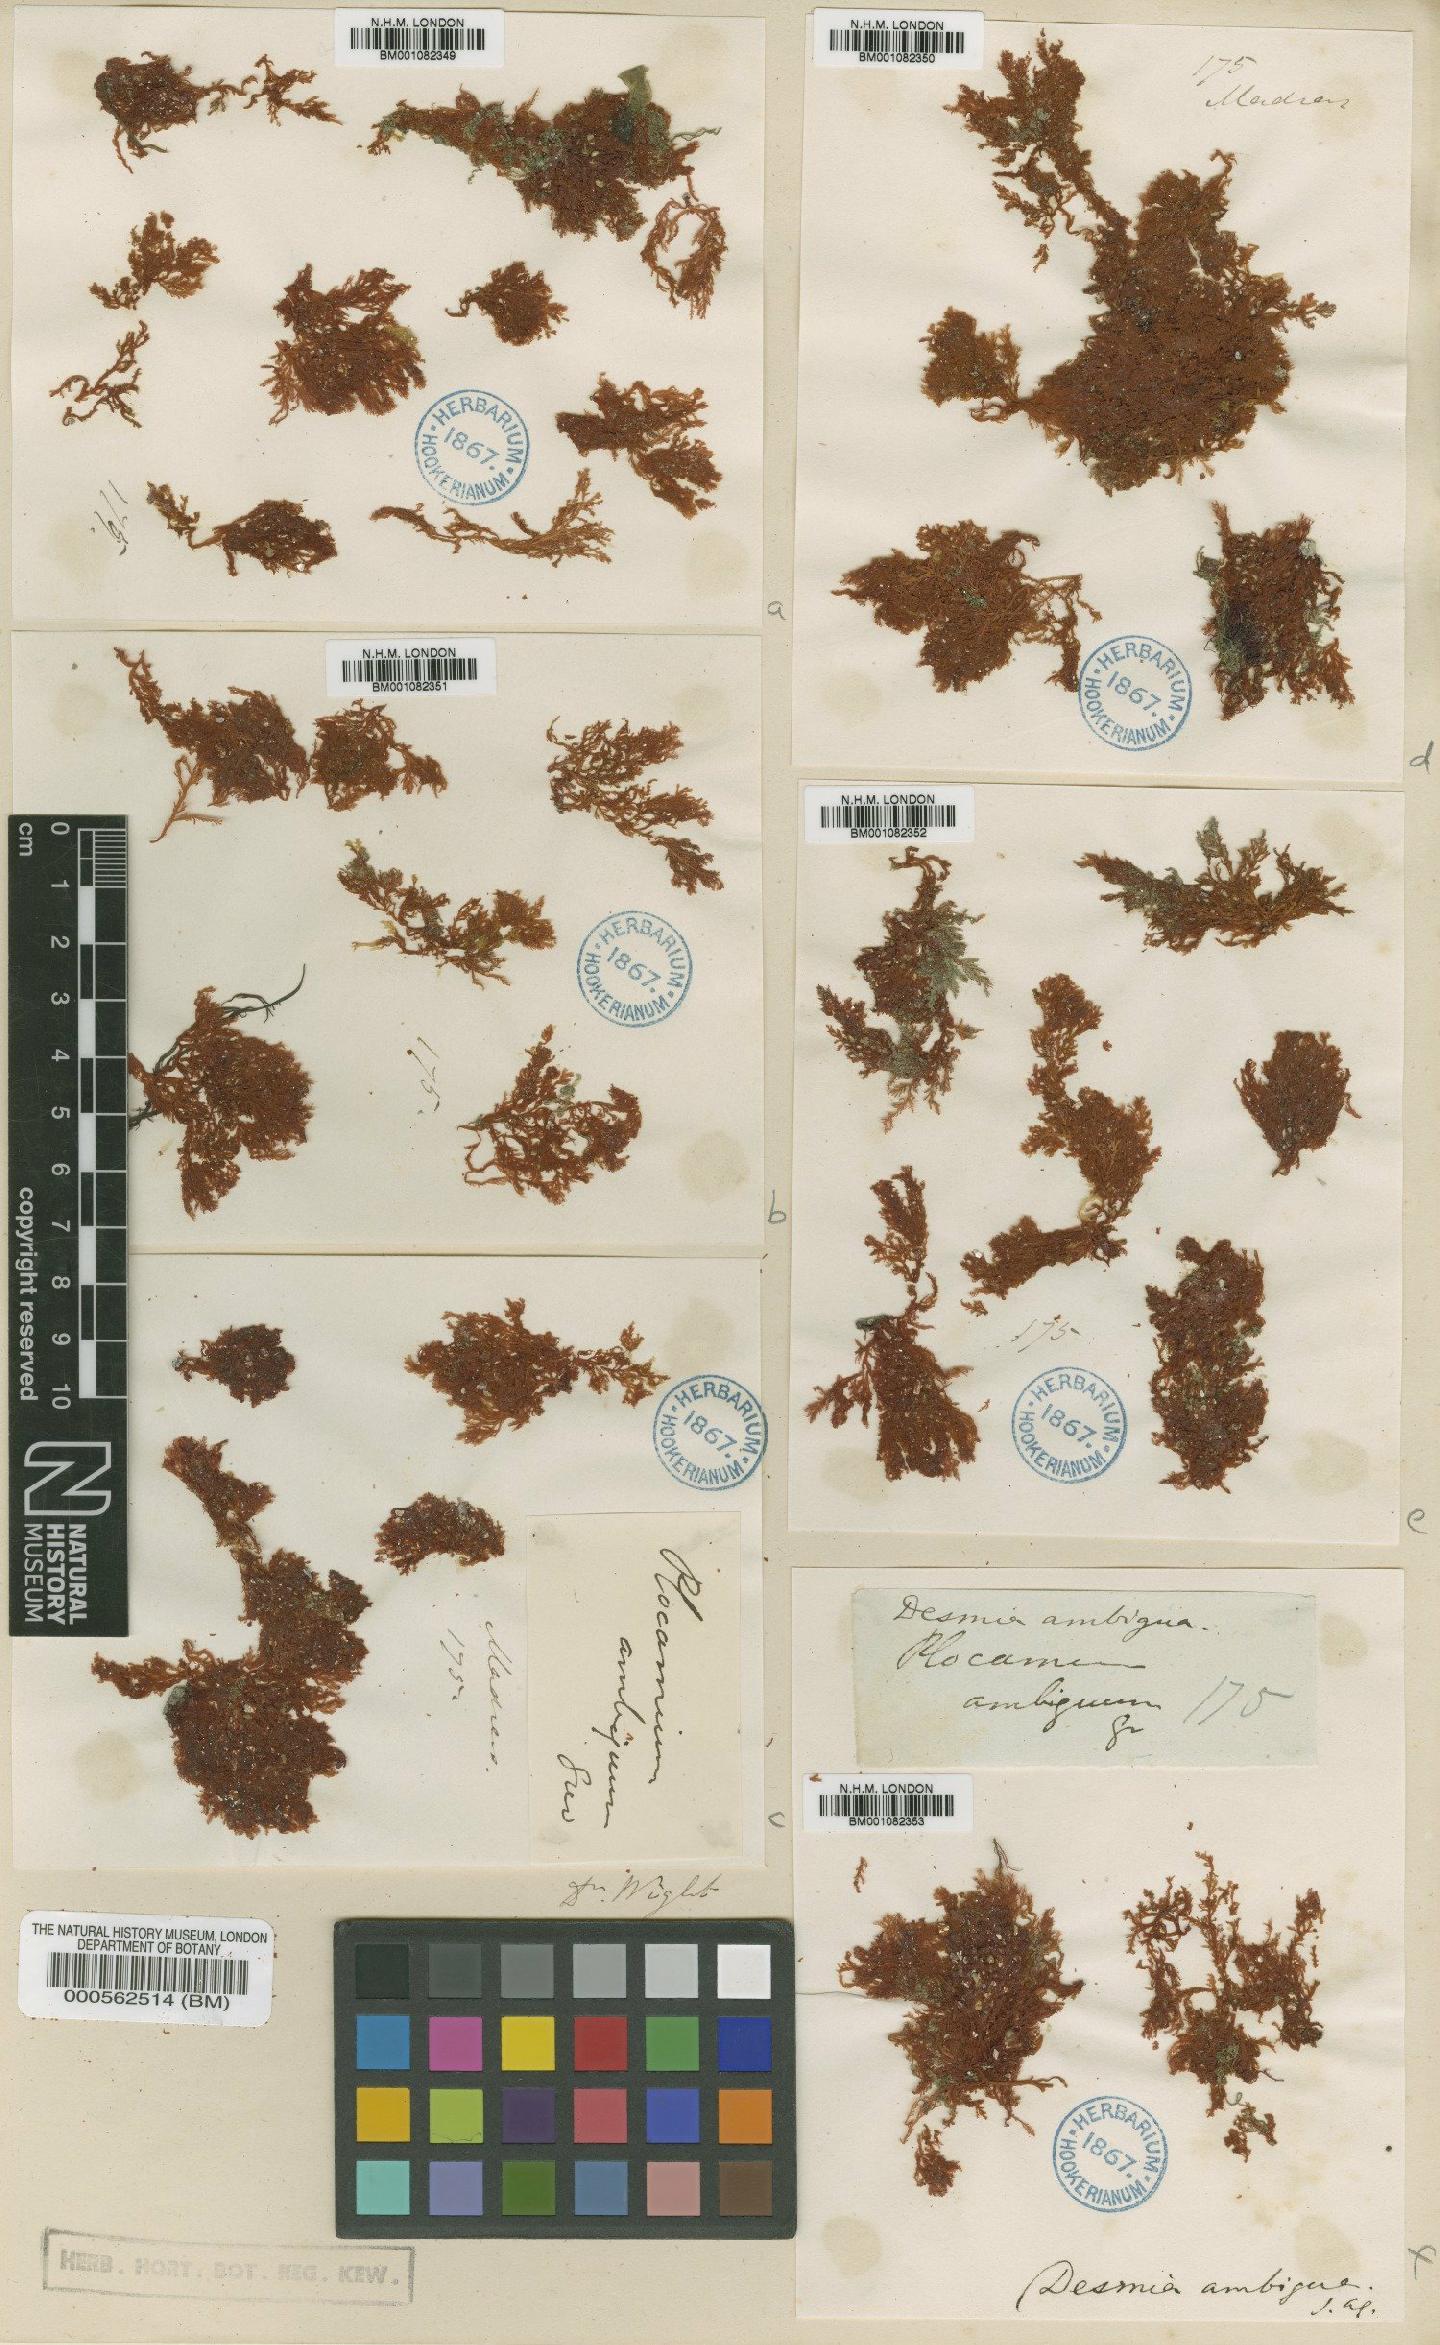 To NHMUK collection (Portieria hornemannii (Lyngb.) P.C.Silva; Isosyntype; NHMUK:ecatalogue:2330276)